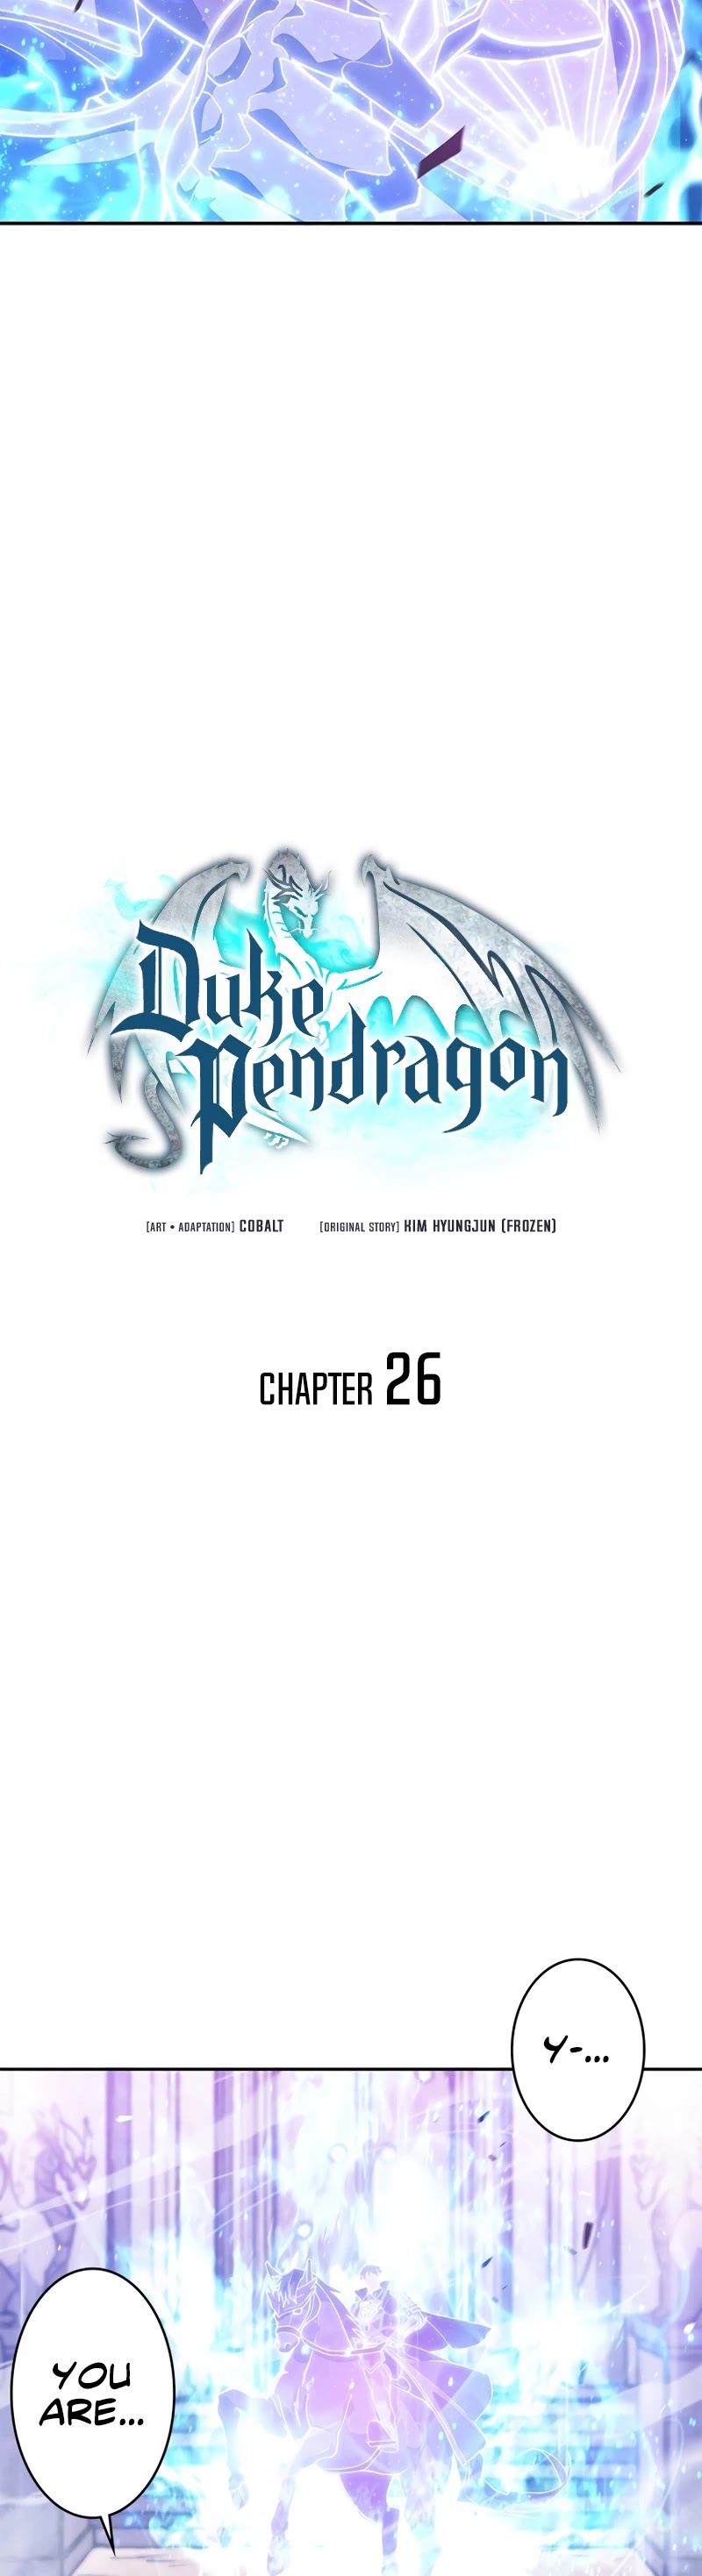 White Dragon Duke: Pendragon Chapter 26